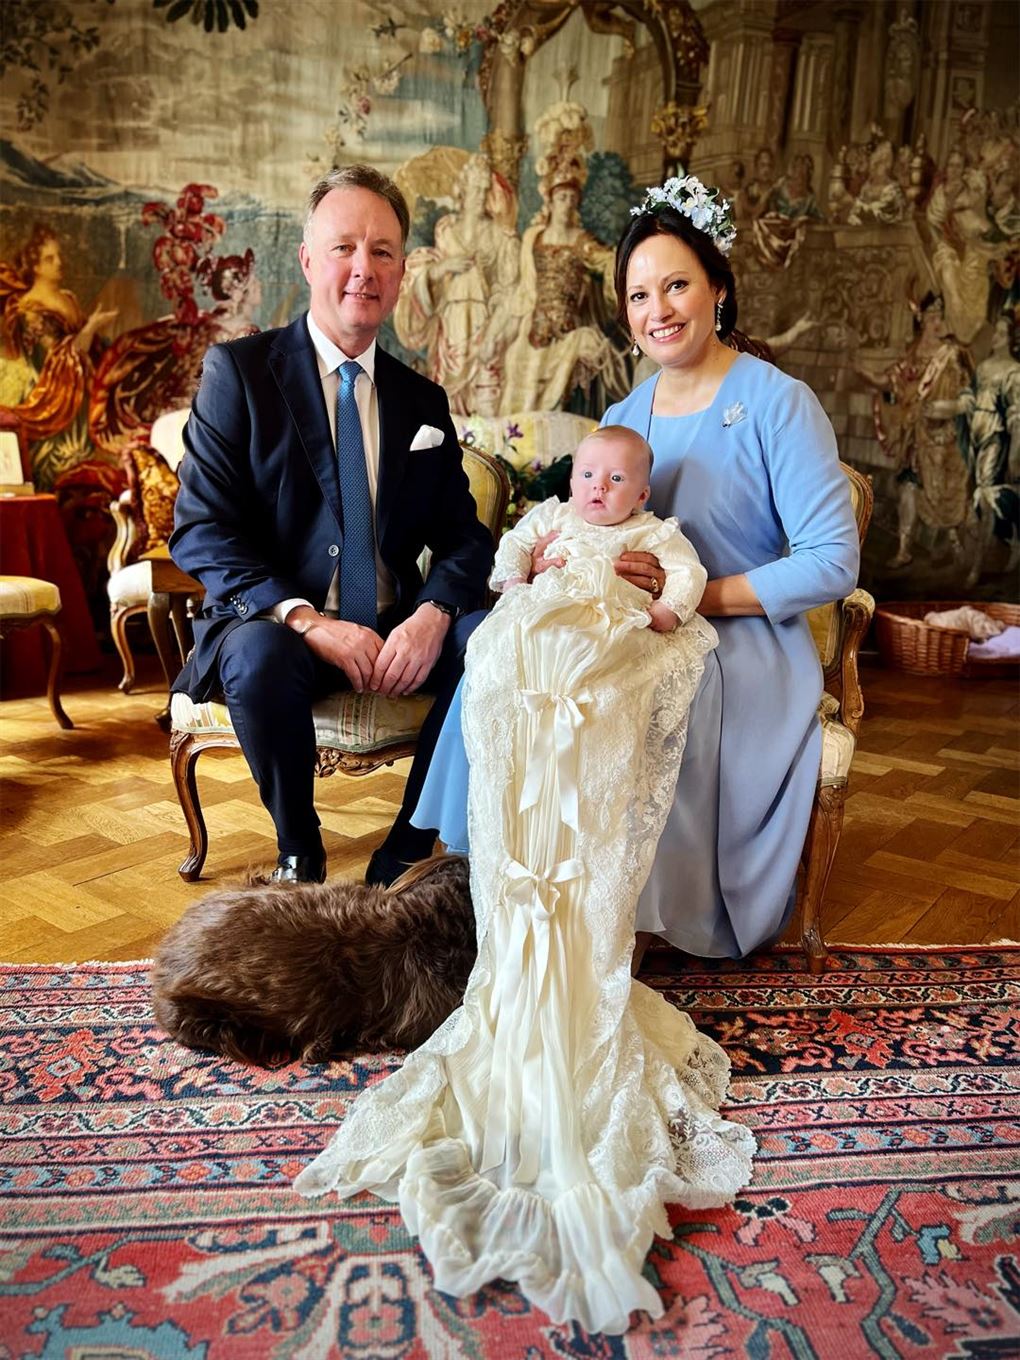 Prins Gustav og prinsesse Carina med dåbsbarnet prins Gustav på skødet.